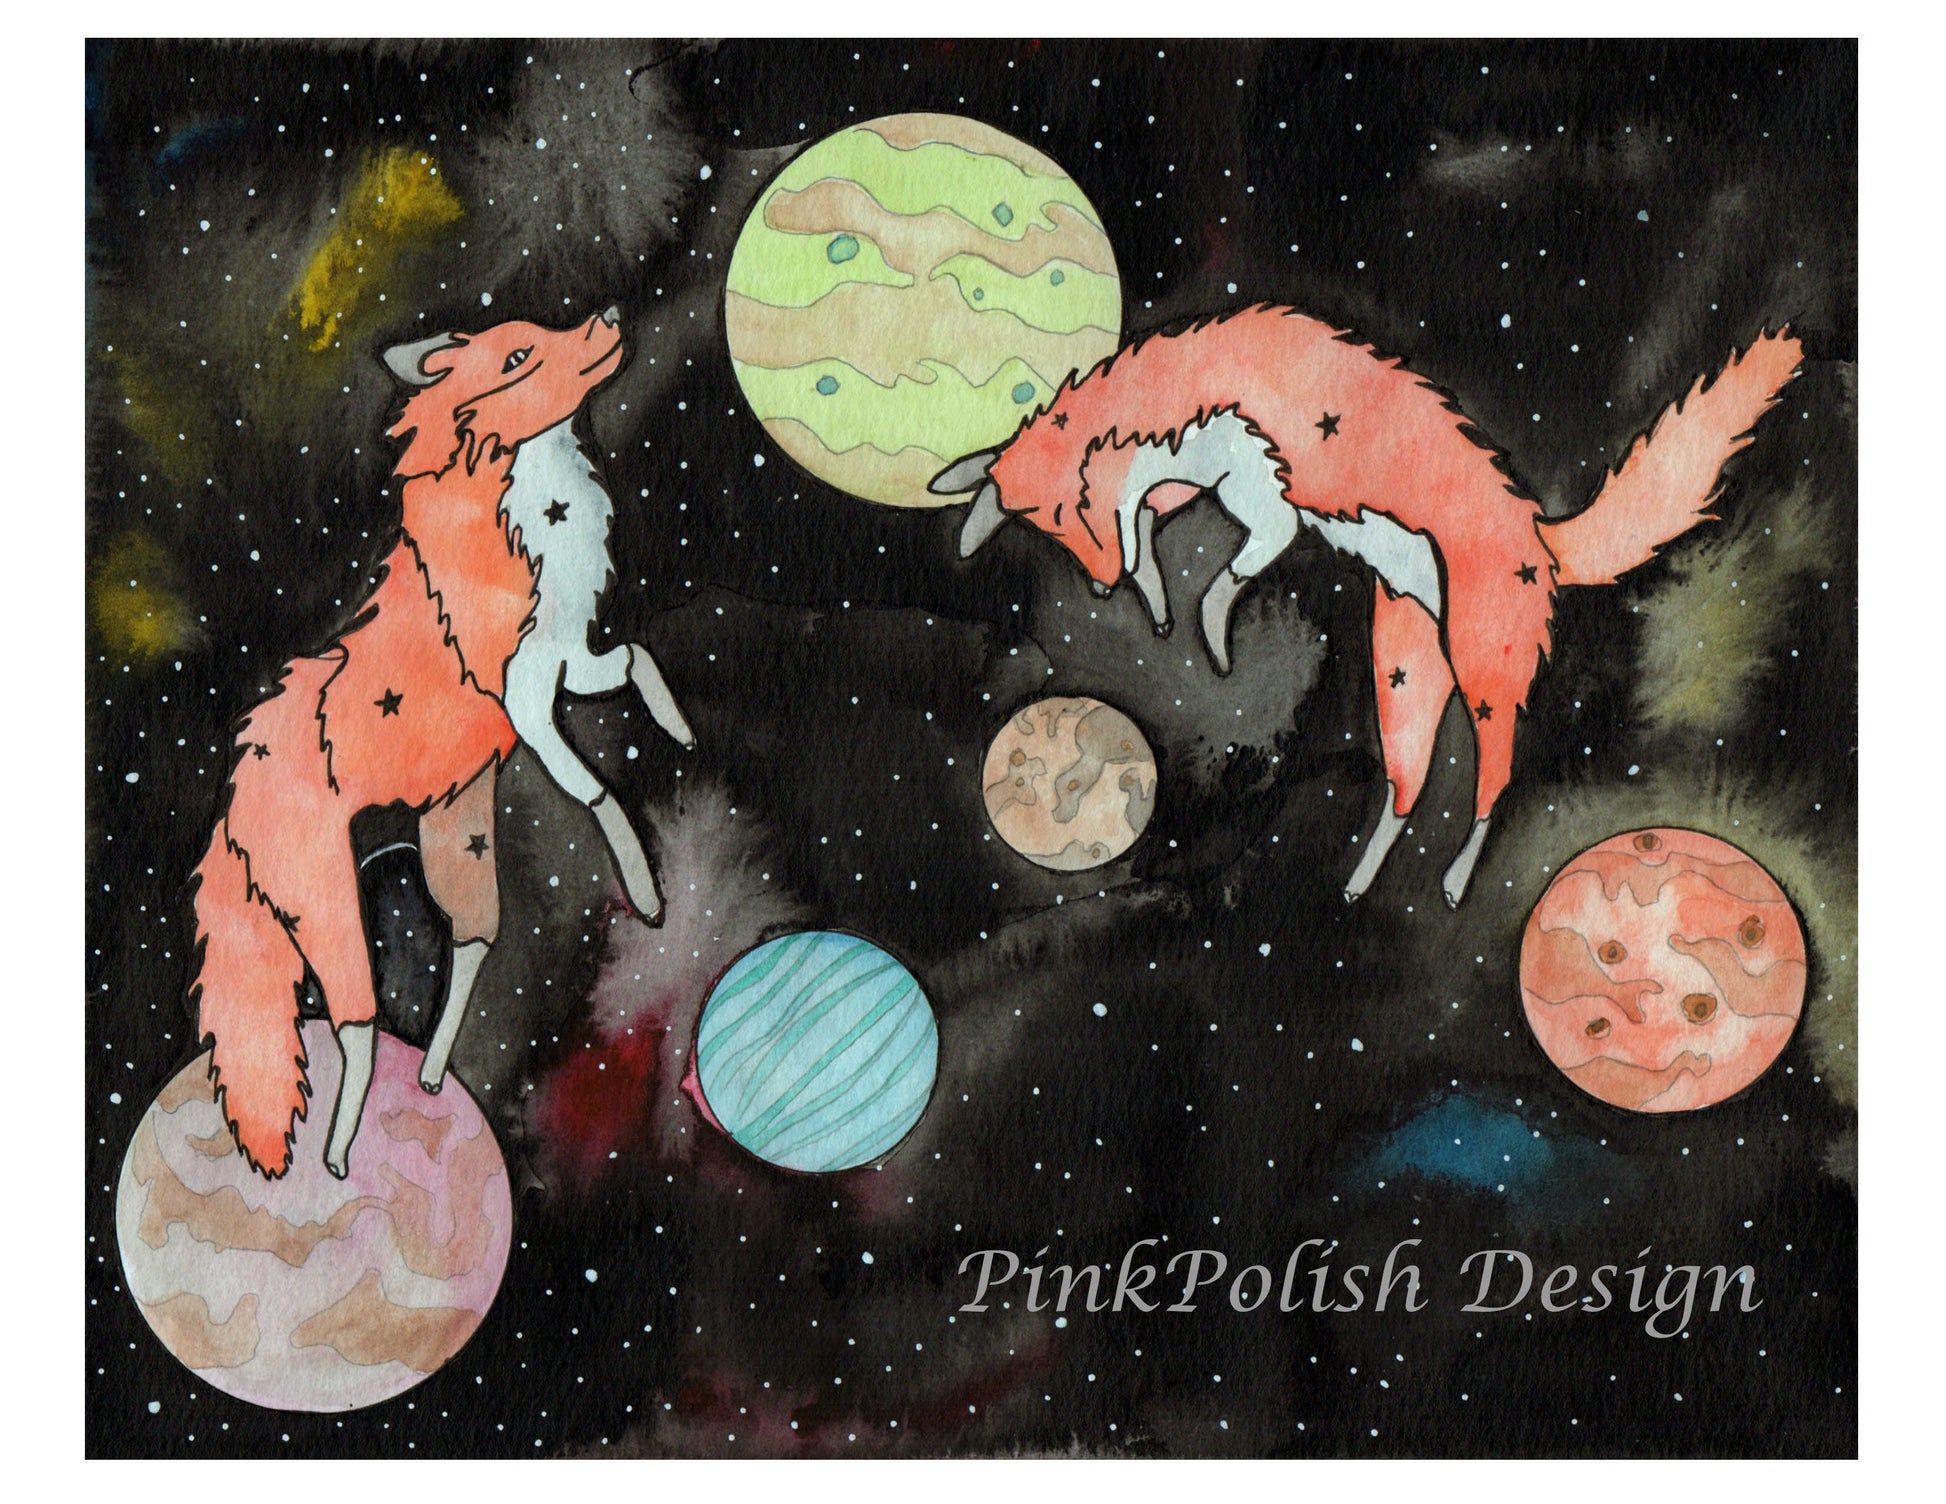 PinkPolish Design Art Prints "Star Foxes" Watercolor Painting: Art Print